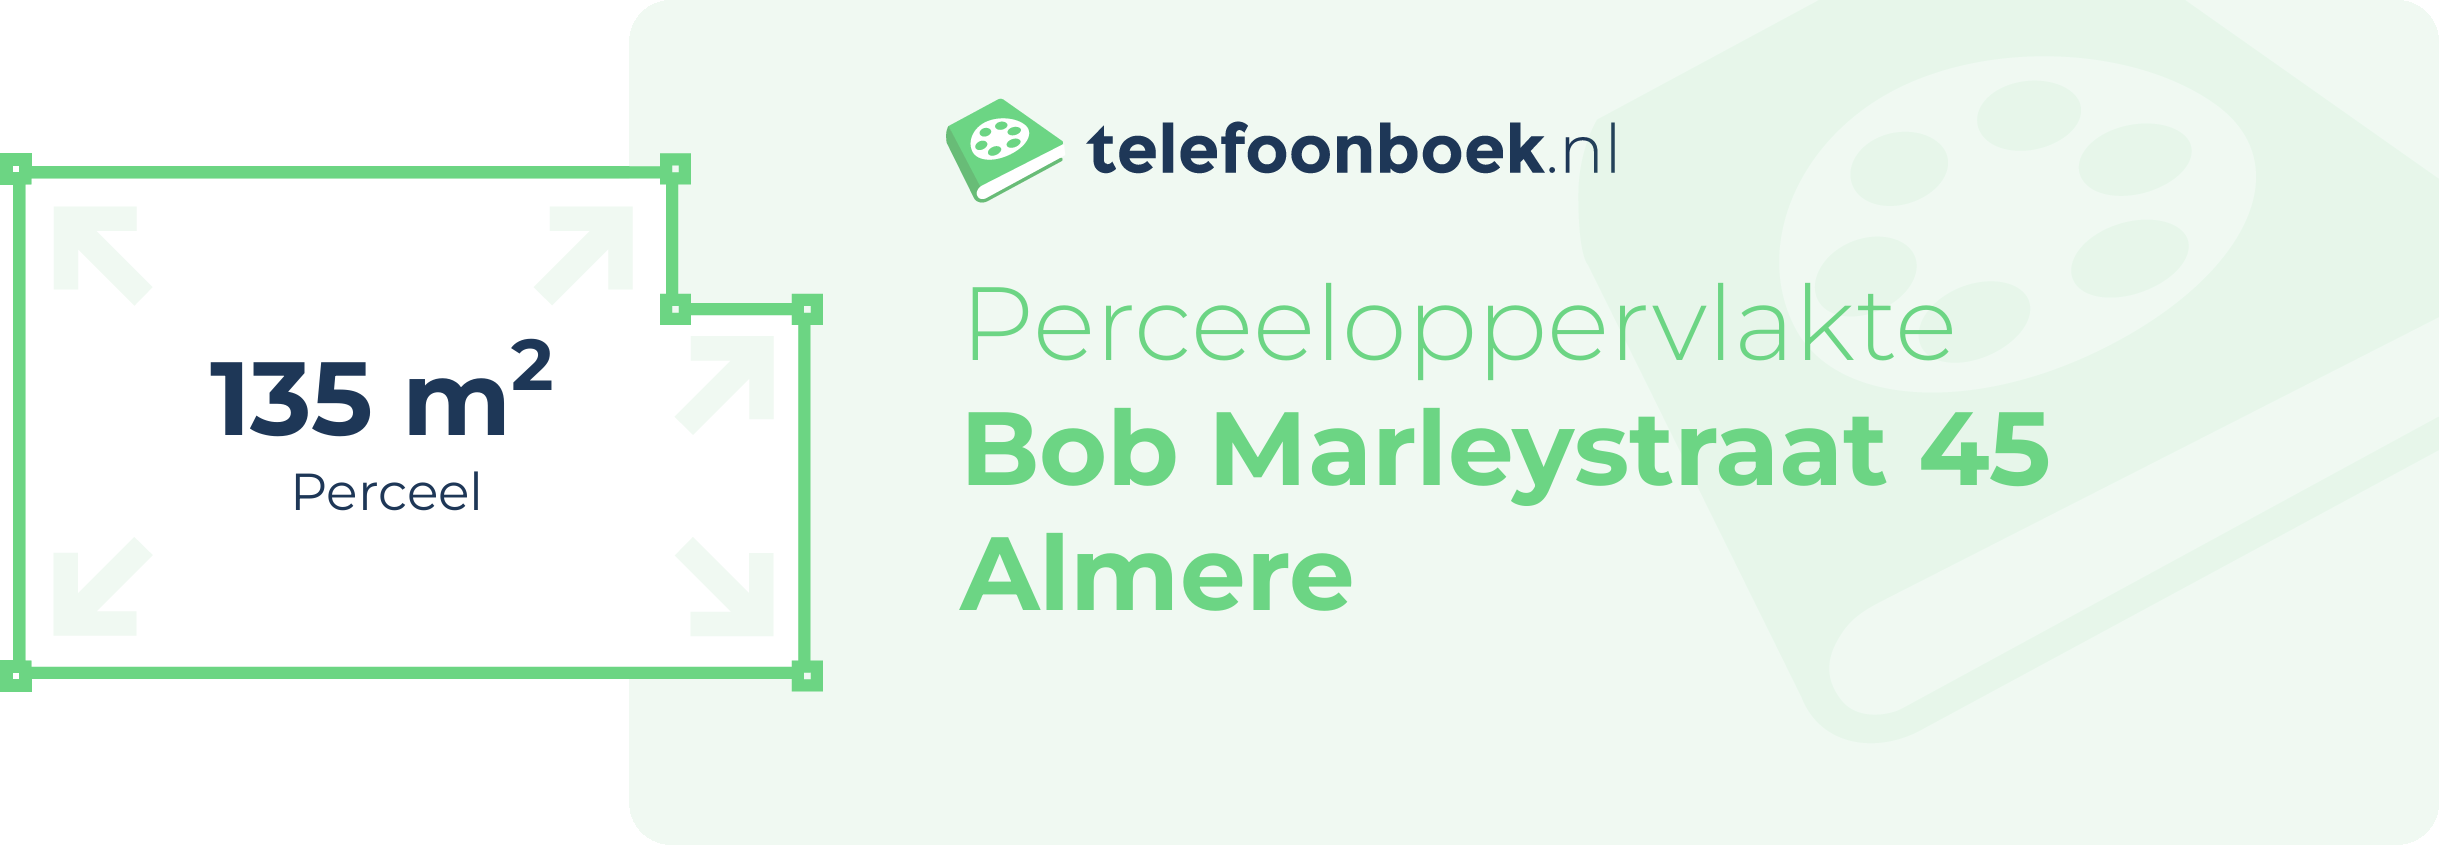 Perceeloppervlakte Bob Marleystraat 45 Almere